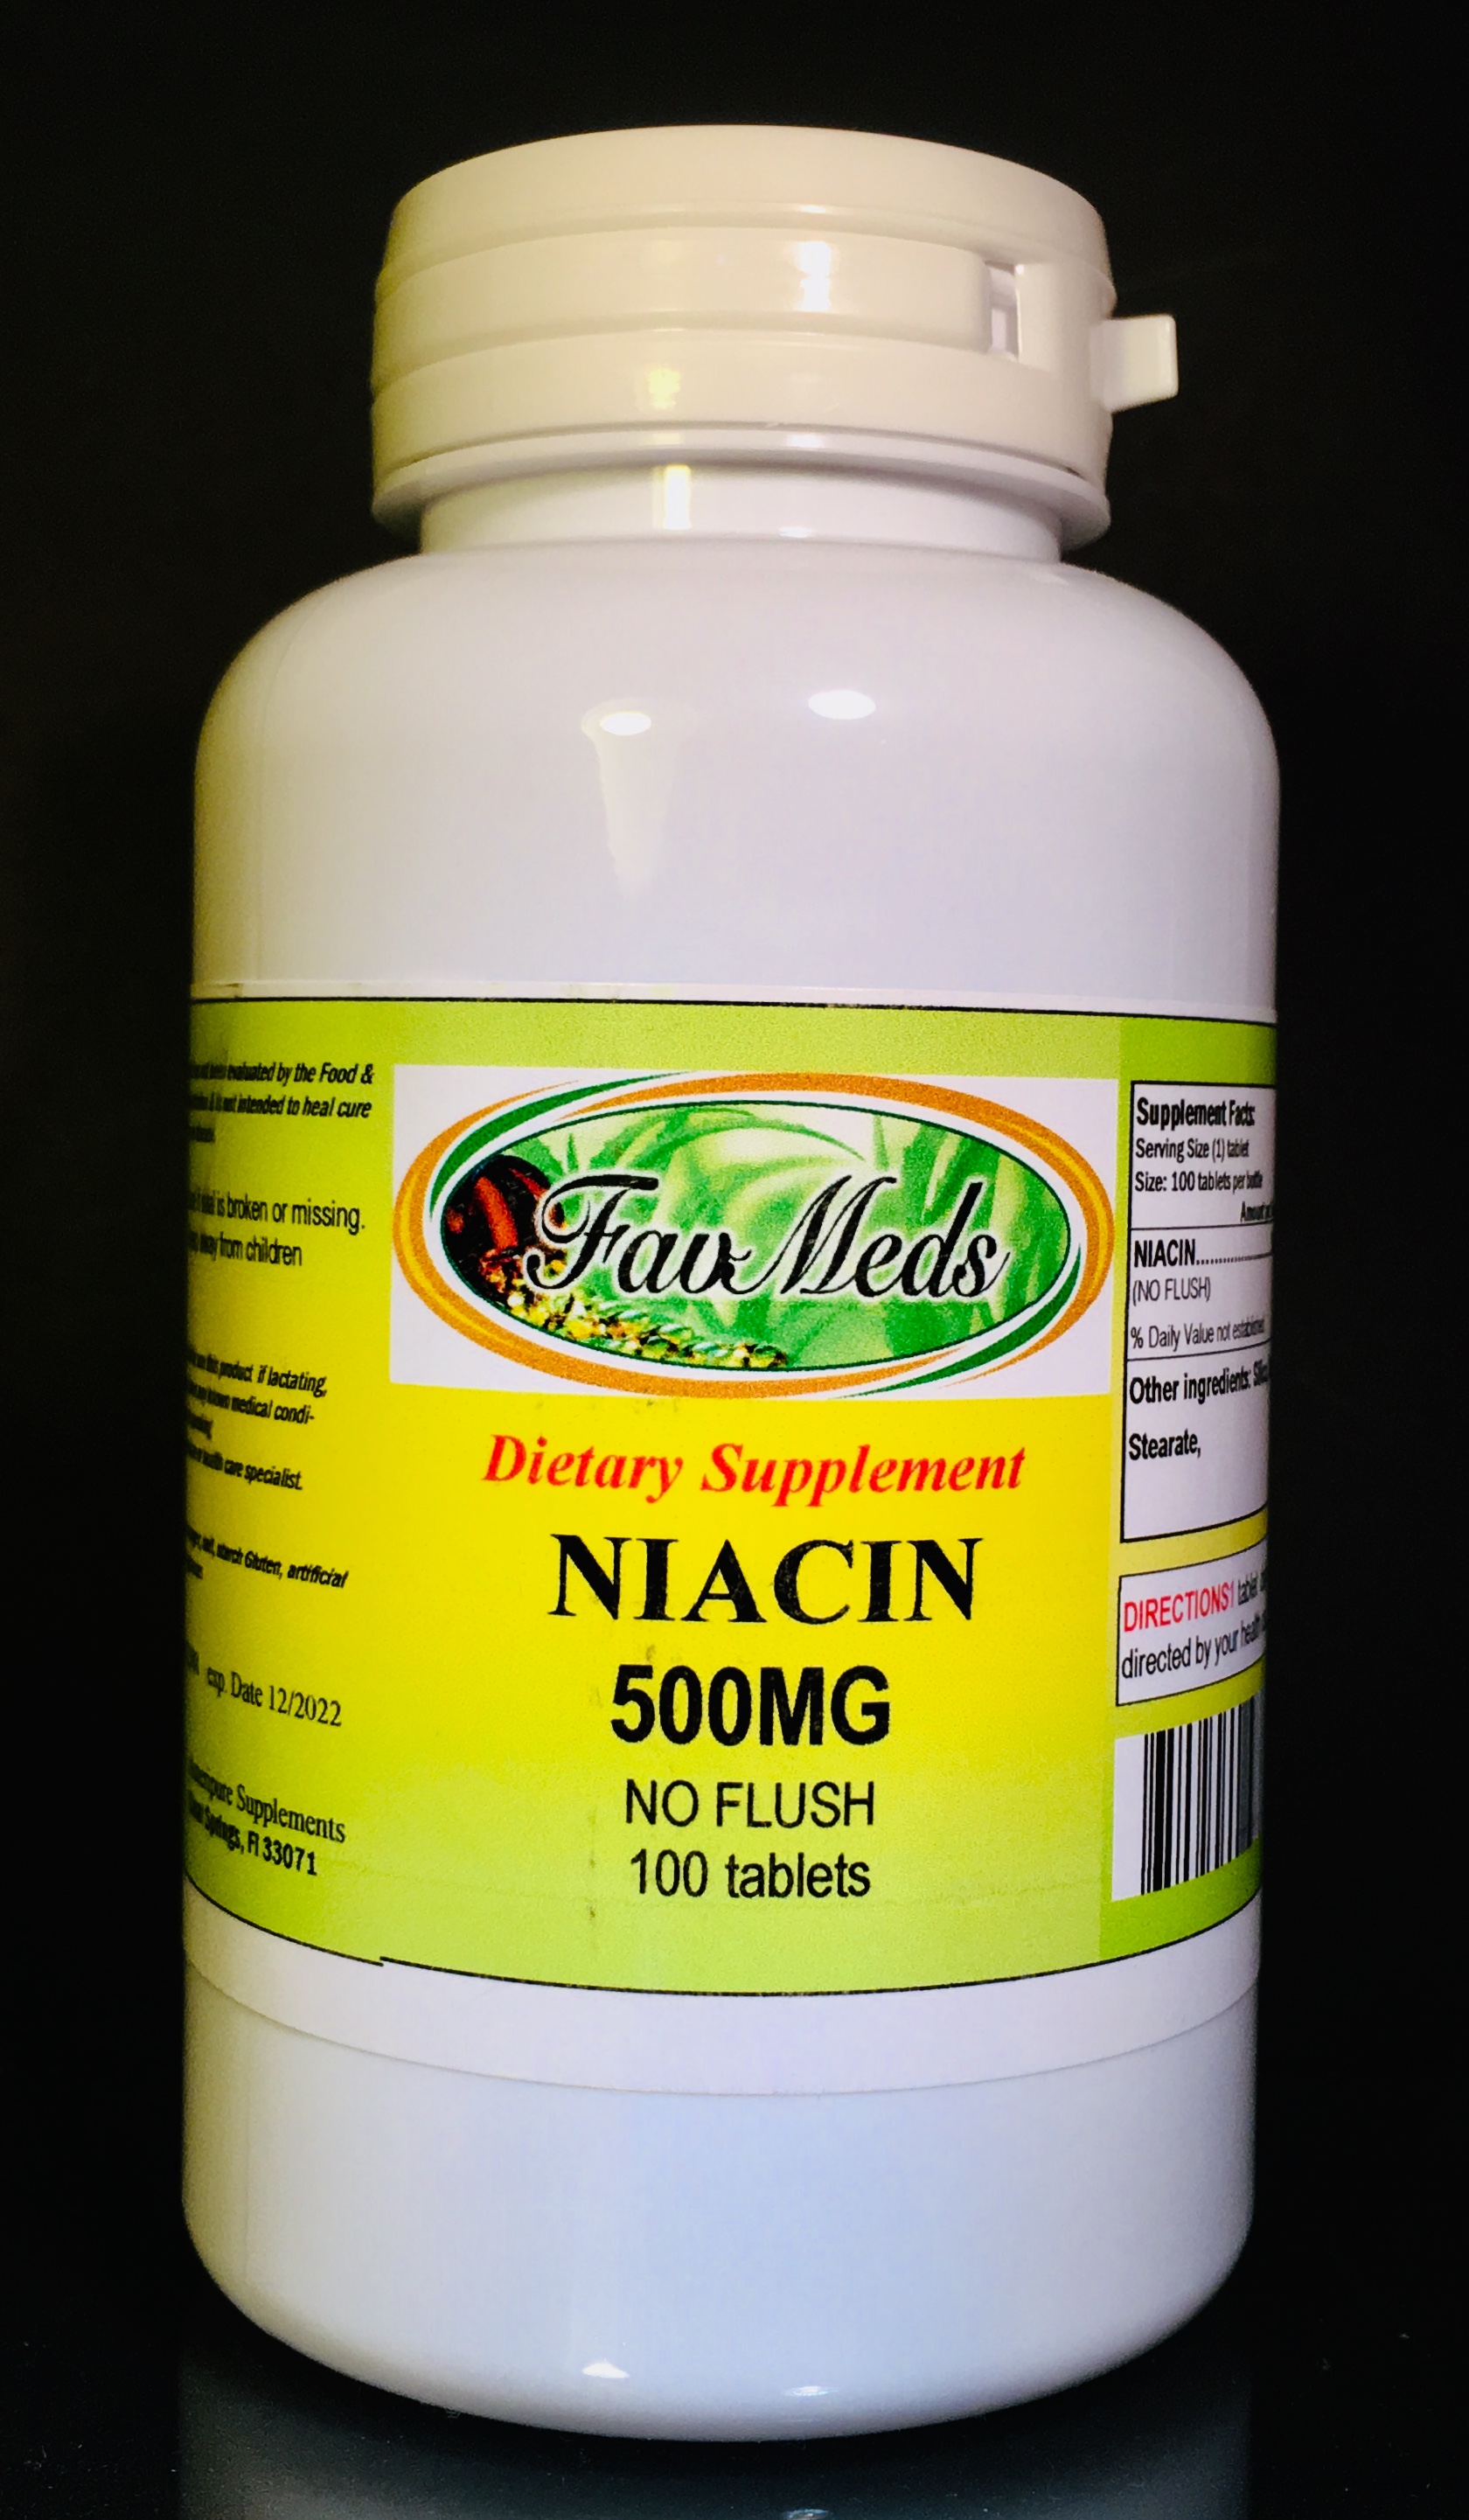 Niacin No flush 500mg - 100 tablets